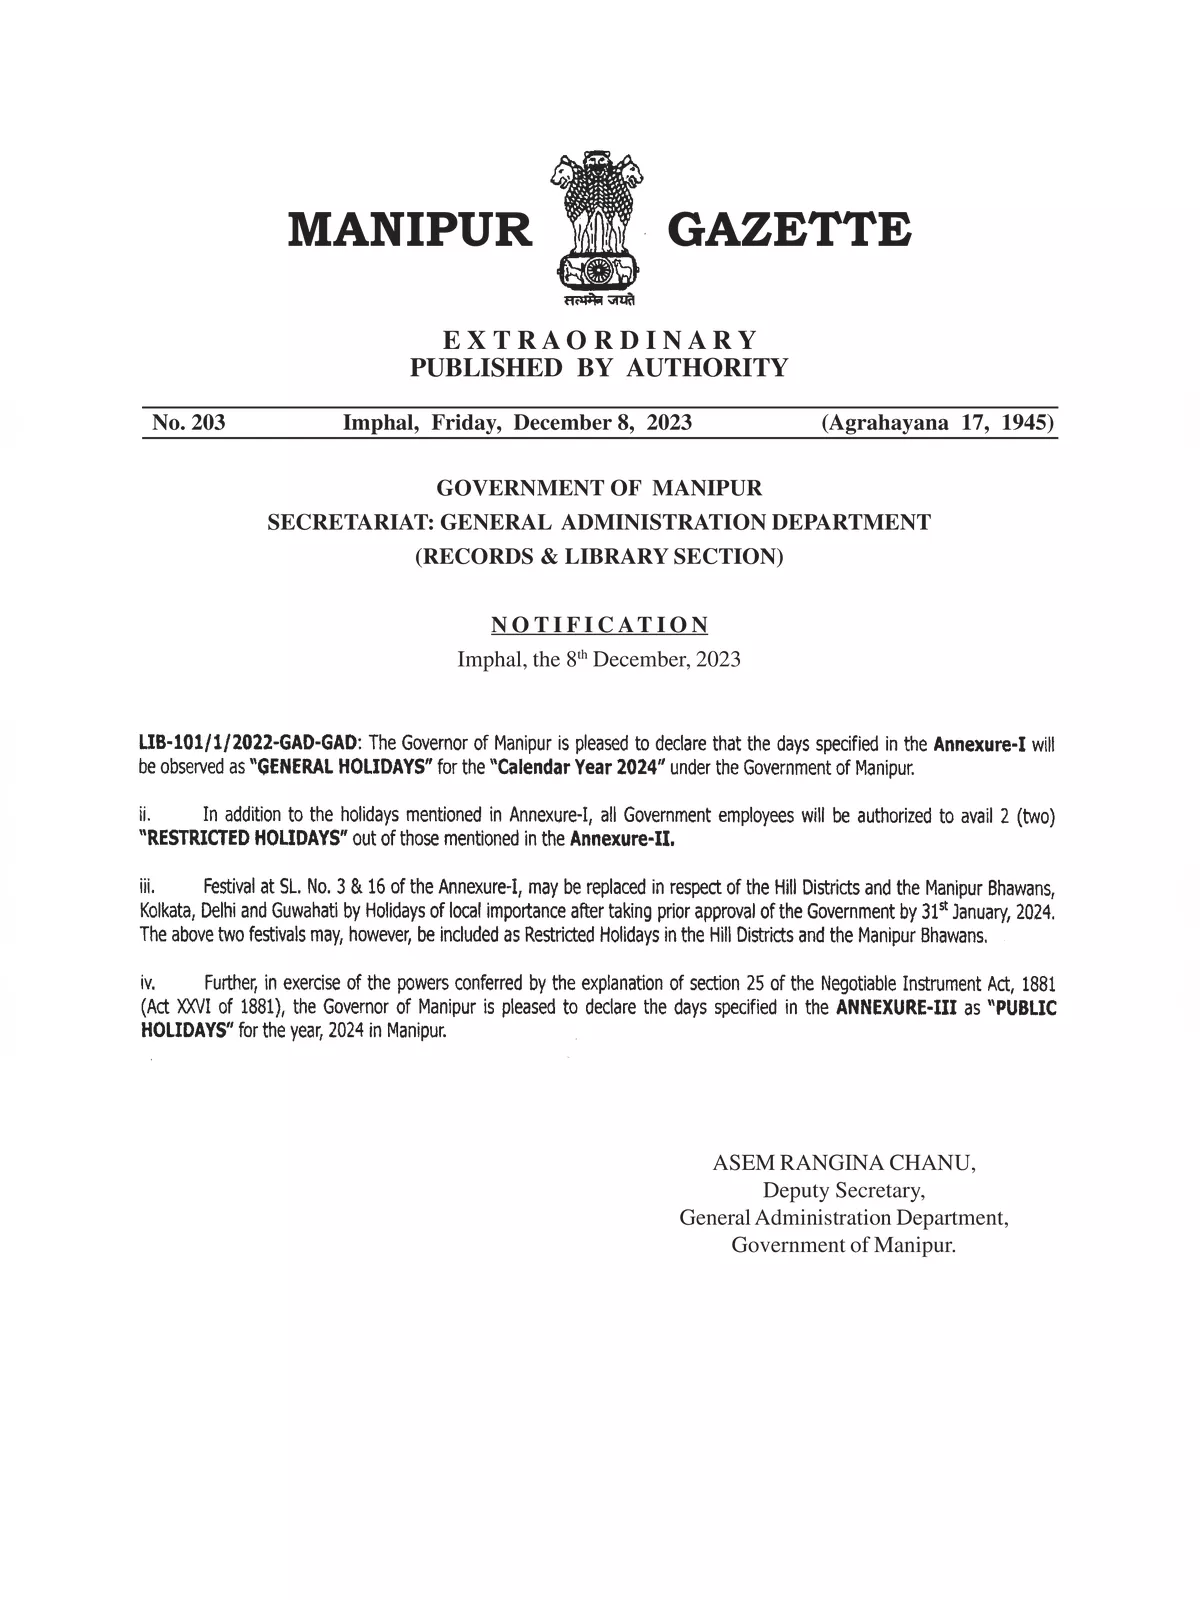 Manipur Holiday List 2024